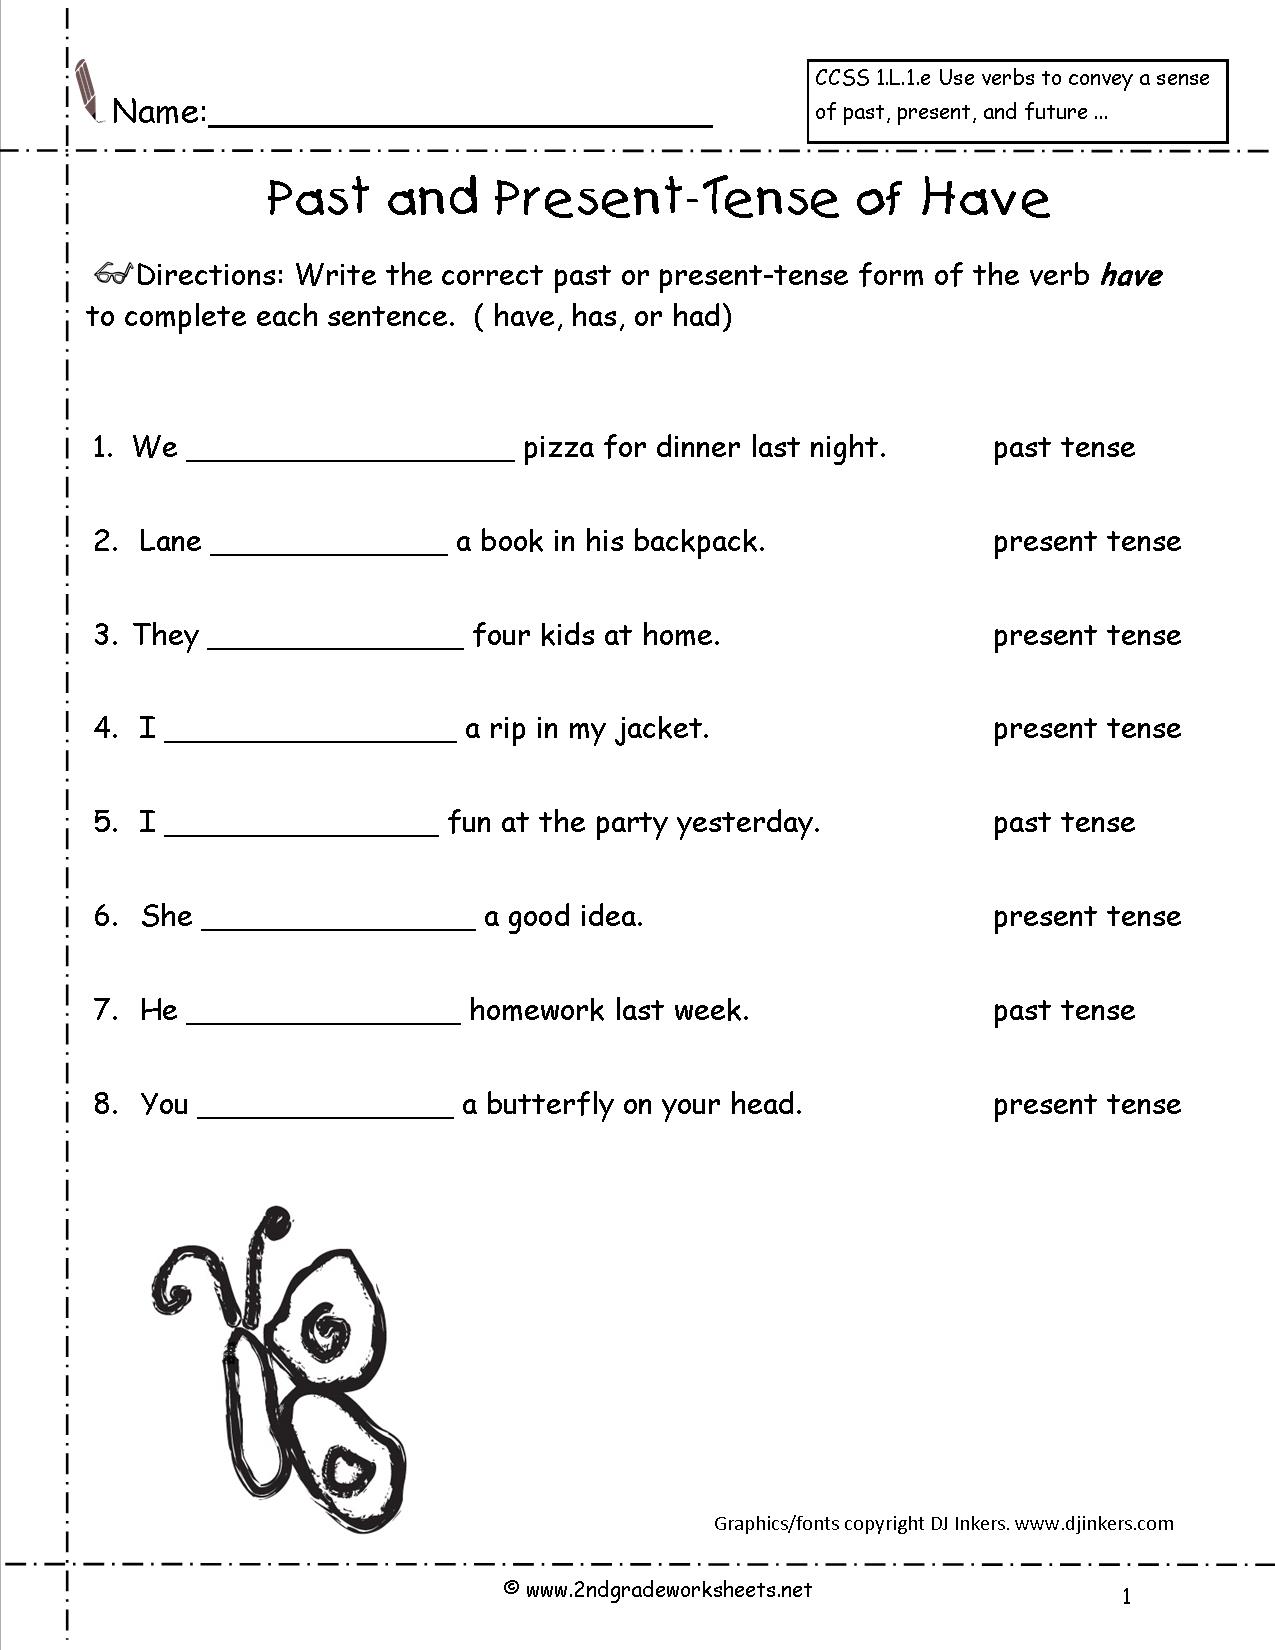 18-best-images-of-regular-past-tense-verbs-worksheets-2nd-grade-past-tense-verbs-worksheets